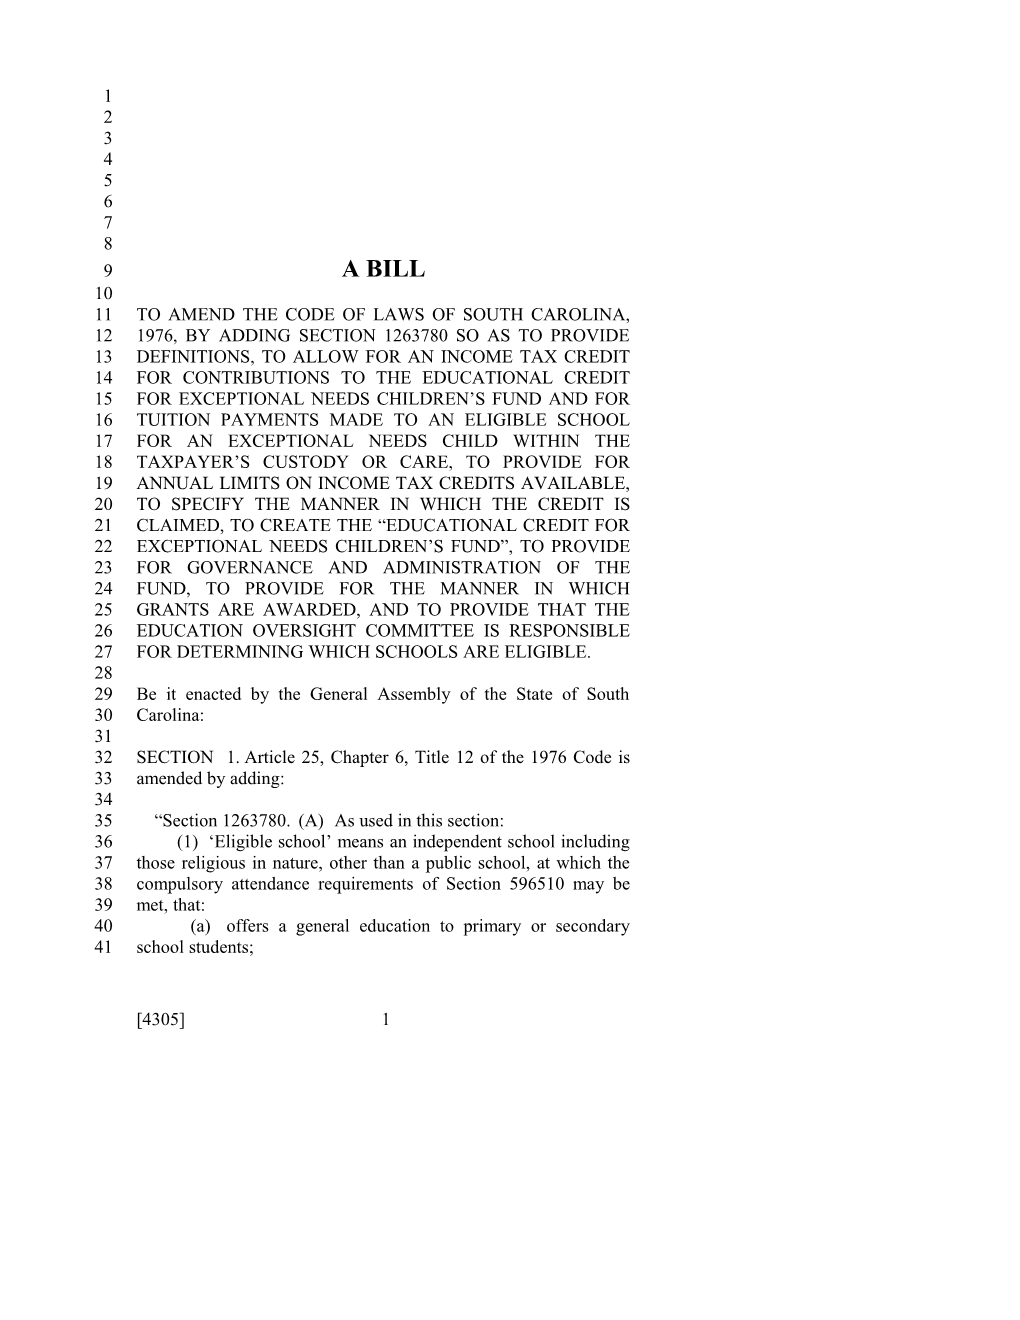 2017-2018 Bill 4305 Text of Previous Version (May 9, 2017) - South Carolina Legislature Online